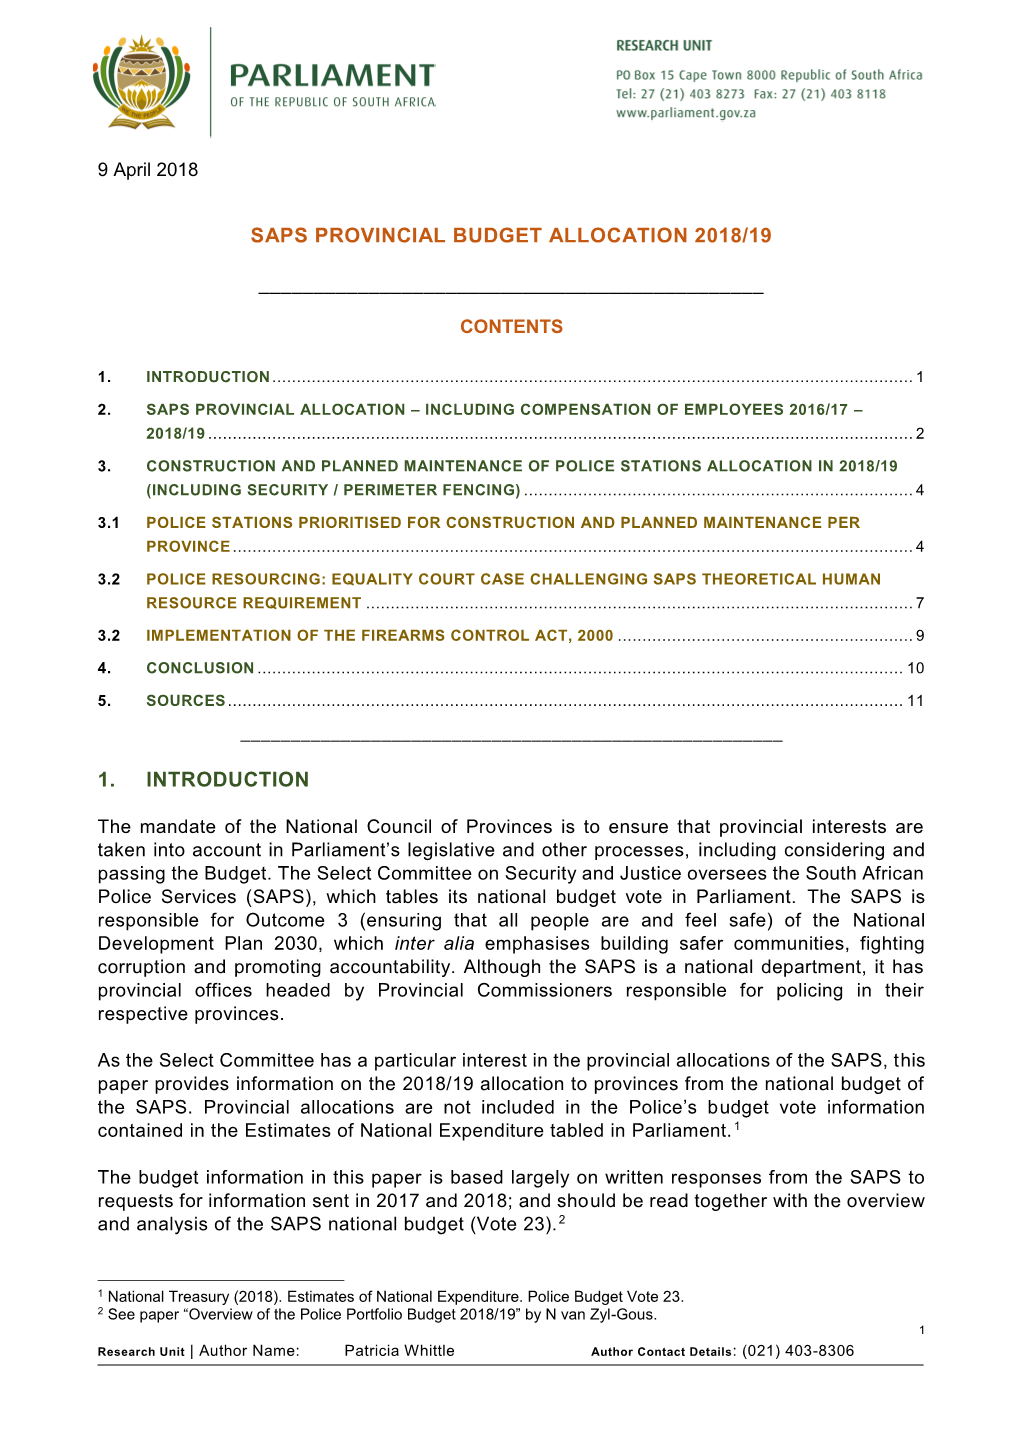 Research Unit: SAPS Provincial Budget Allocation 2018/19